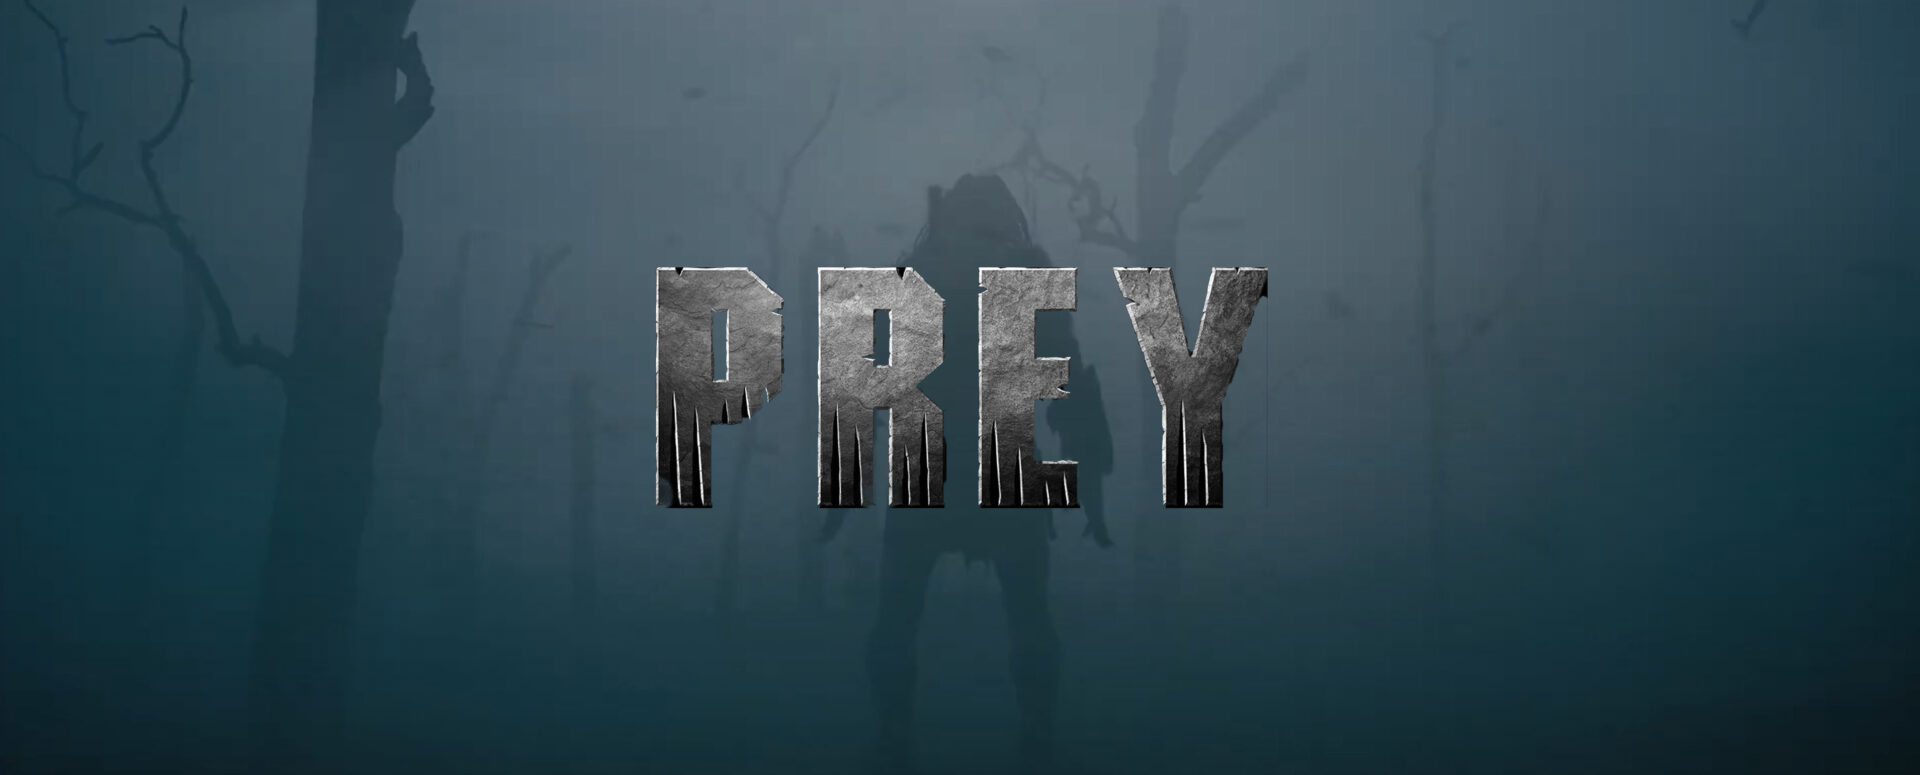 prey theatrical trailer banner